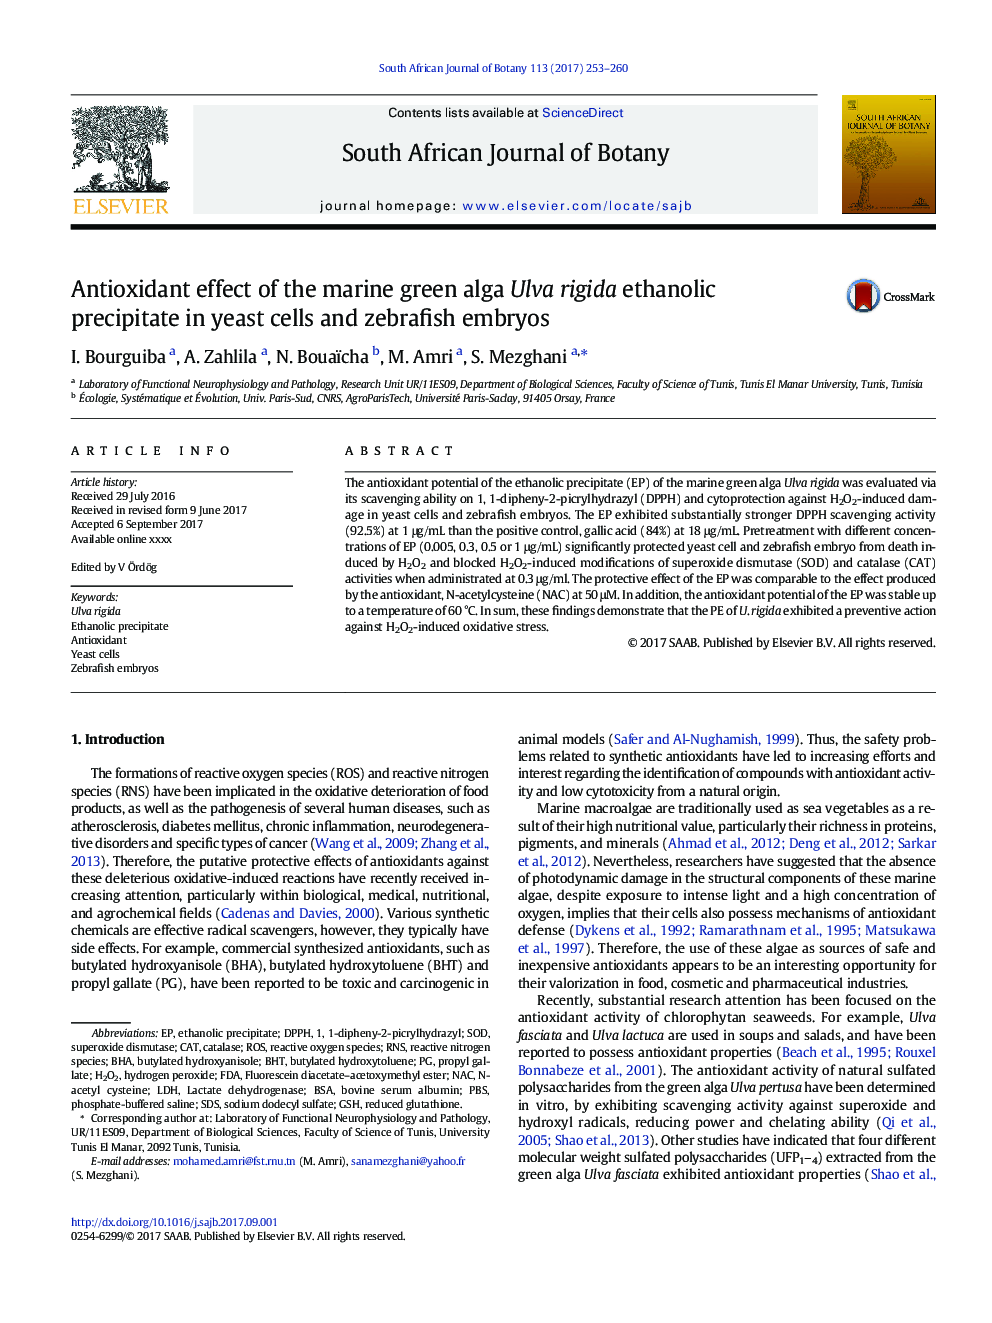 Antioxidant effect of the marine green alga Ulva rigida ethanolic precipitate in yeast cells and zebrafish embryos